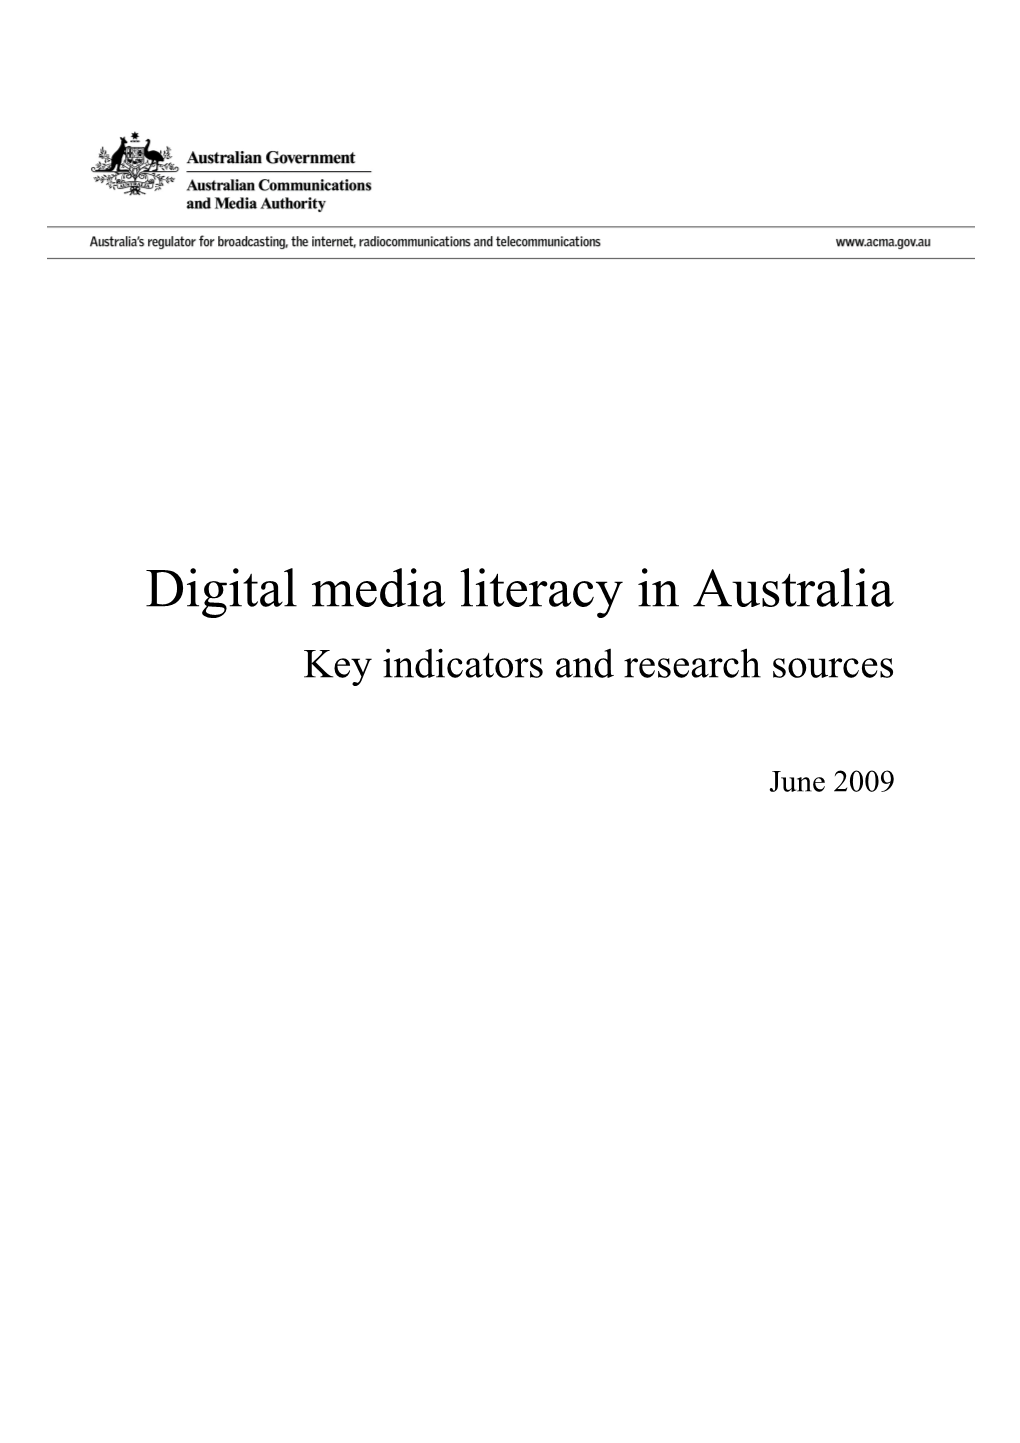 Digital Media Literacy in Australia - Key Indicators & Research Sources